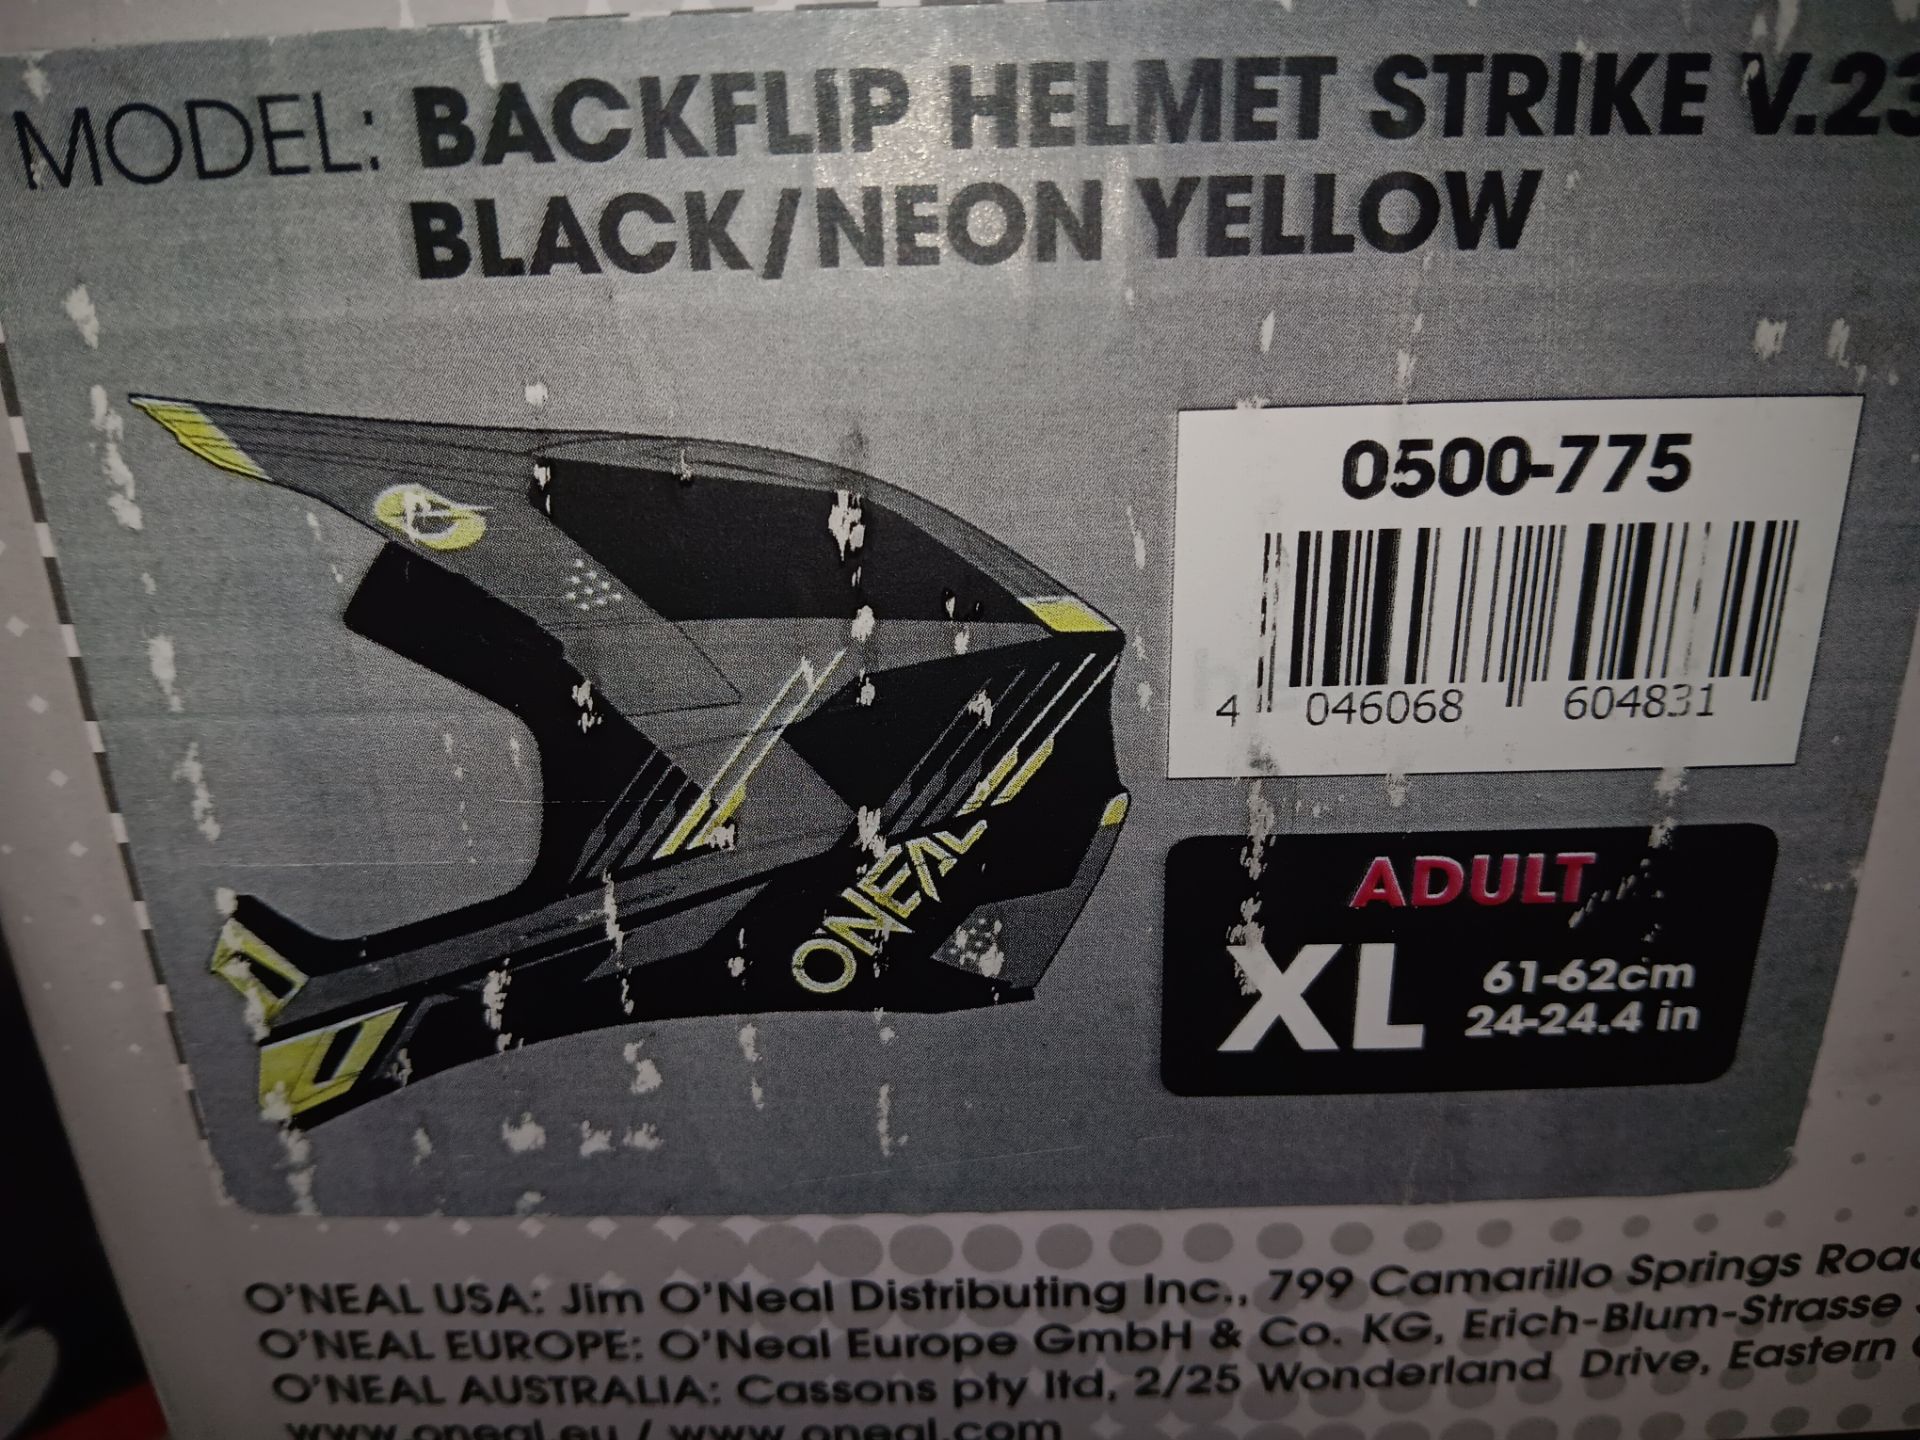 O'Neal Backflip Helmet Strike V.23, Black / Neon Yellow(Adult XL), Boxed - Bild 2 aus 2